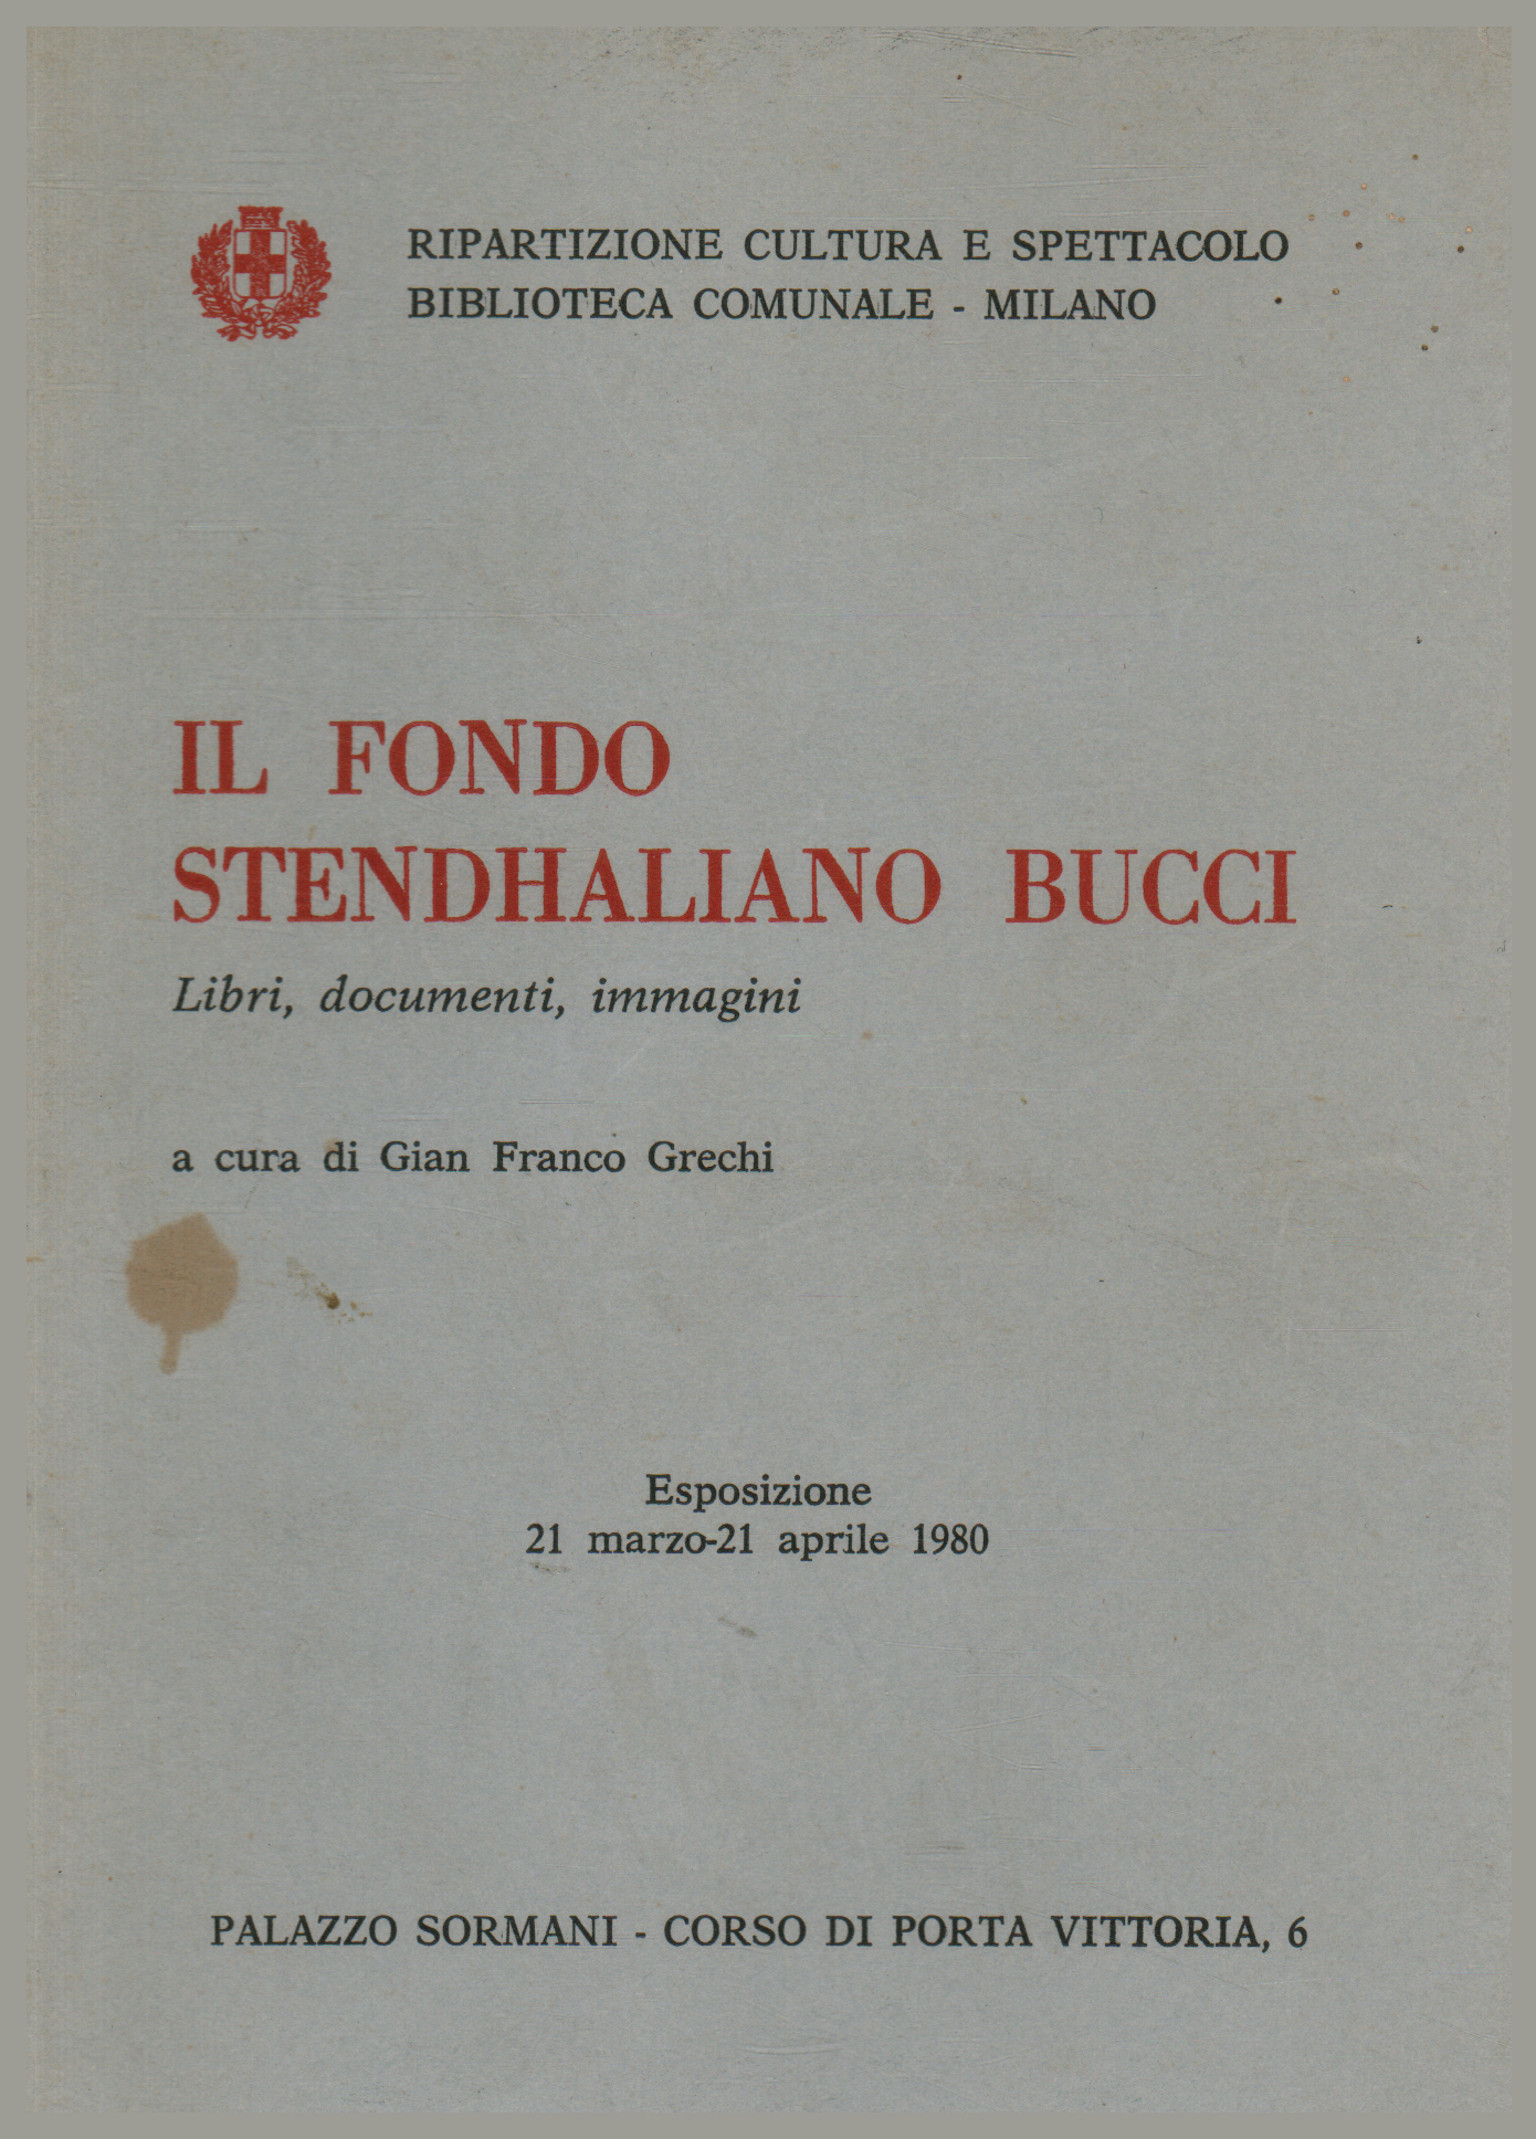 The fund Stendhaliano Bucci, Gian Franco Grechi